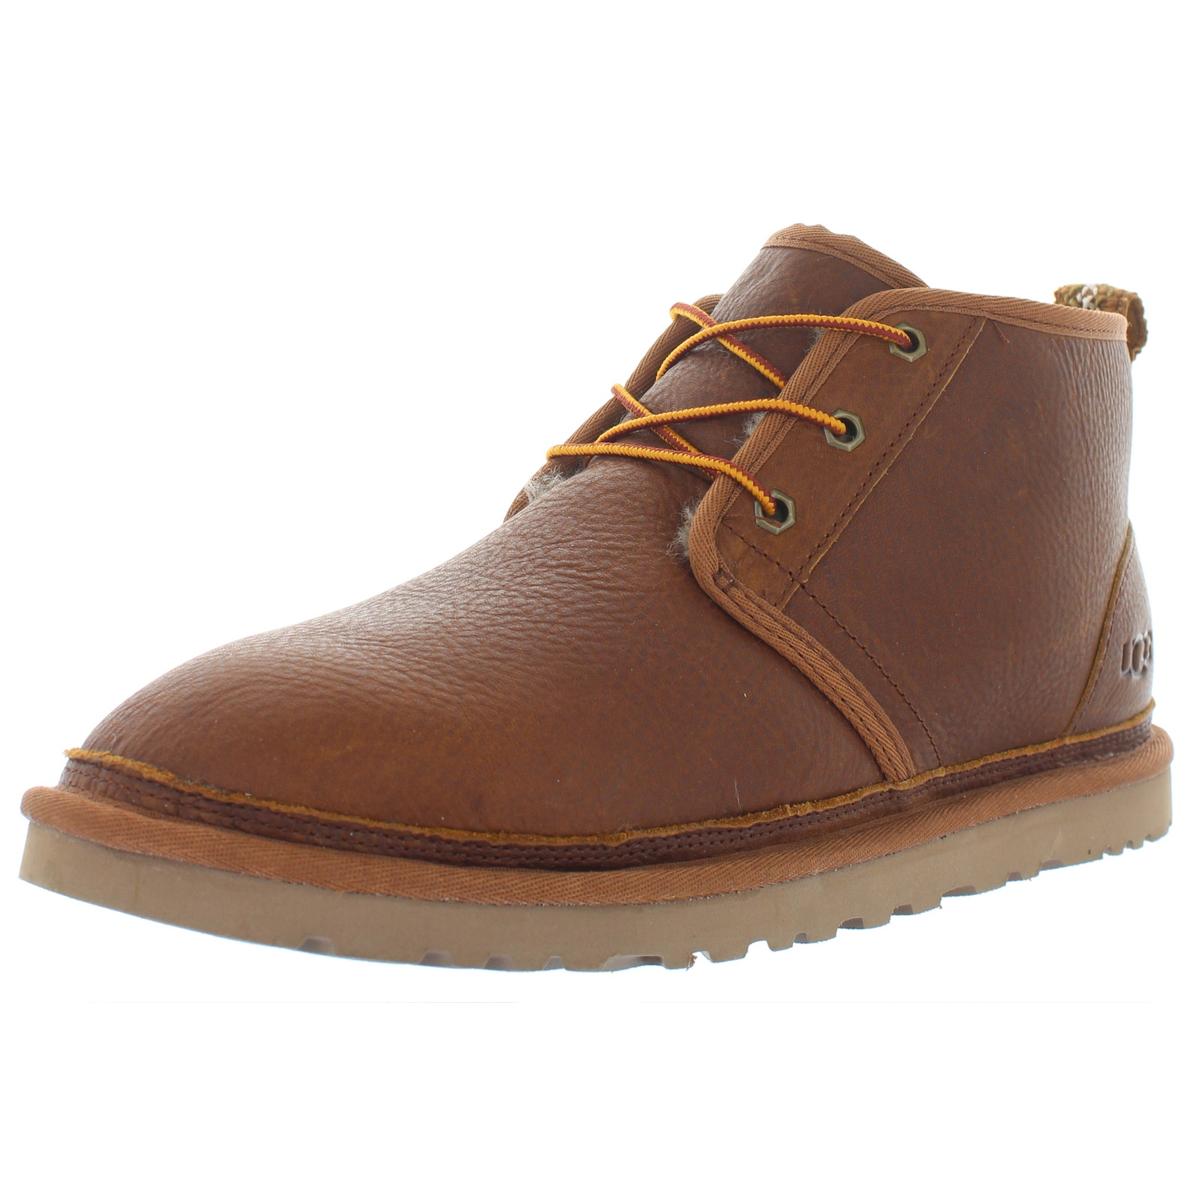 Ugg Australia Mens Mens Neumel Brown Chukka Boots Shoes 11 Medium (D ...